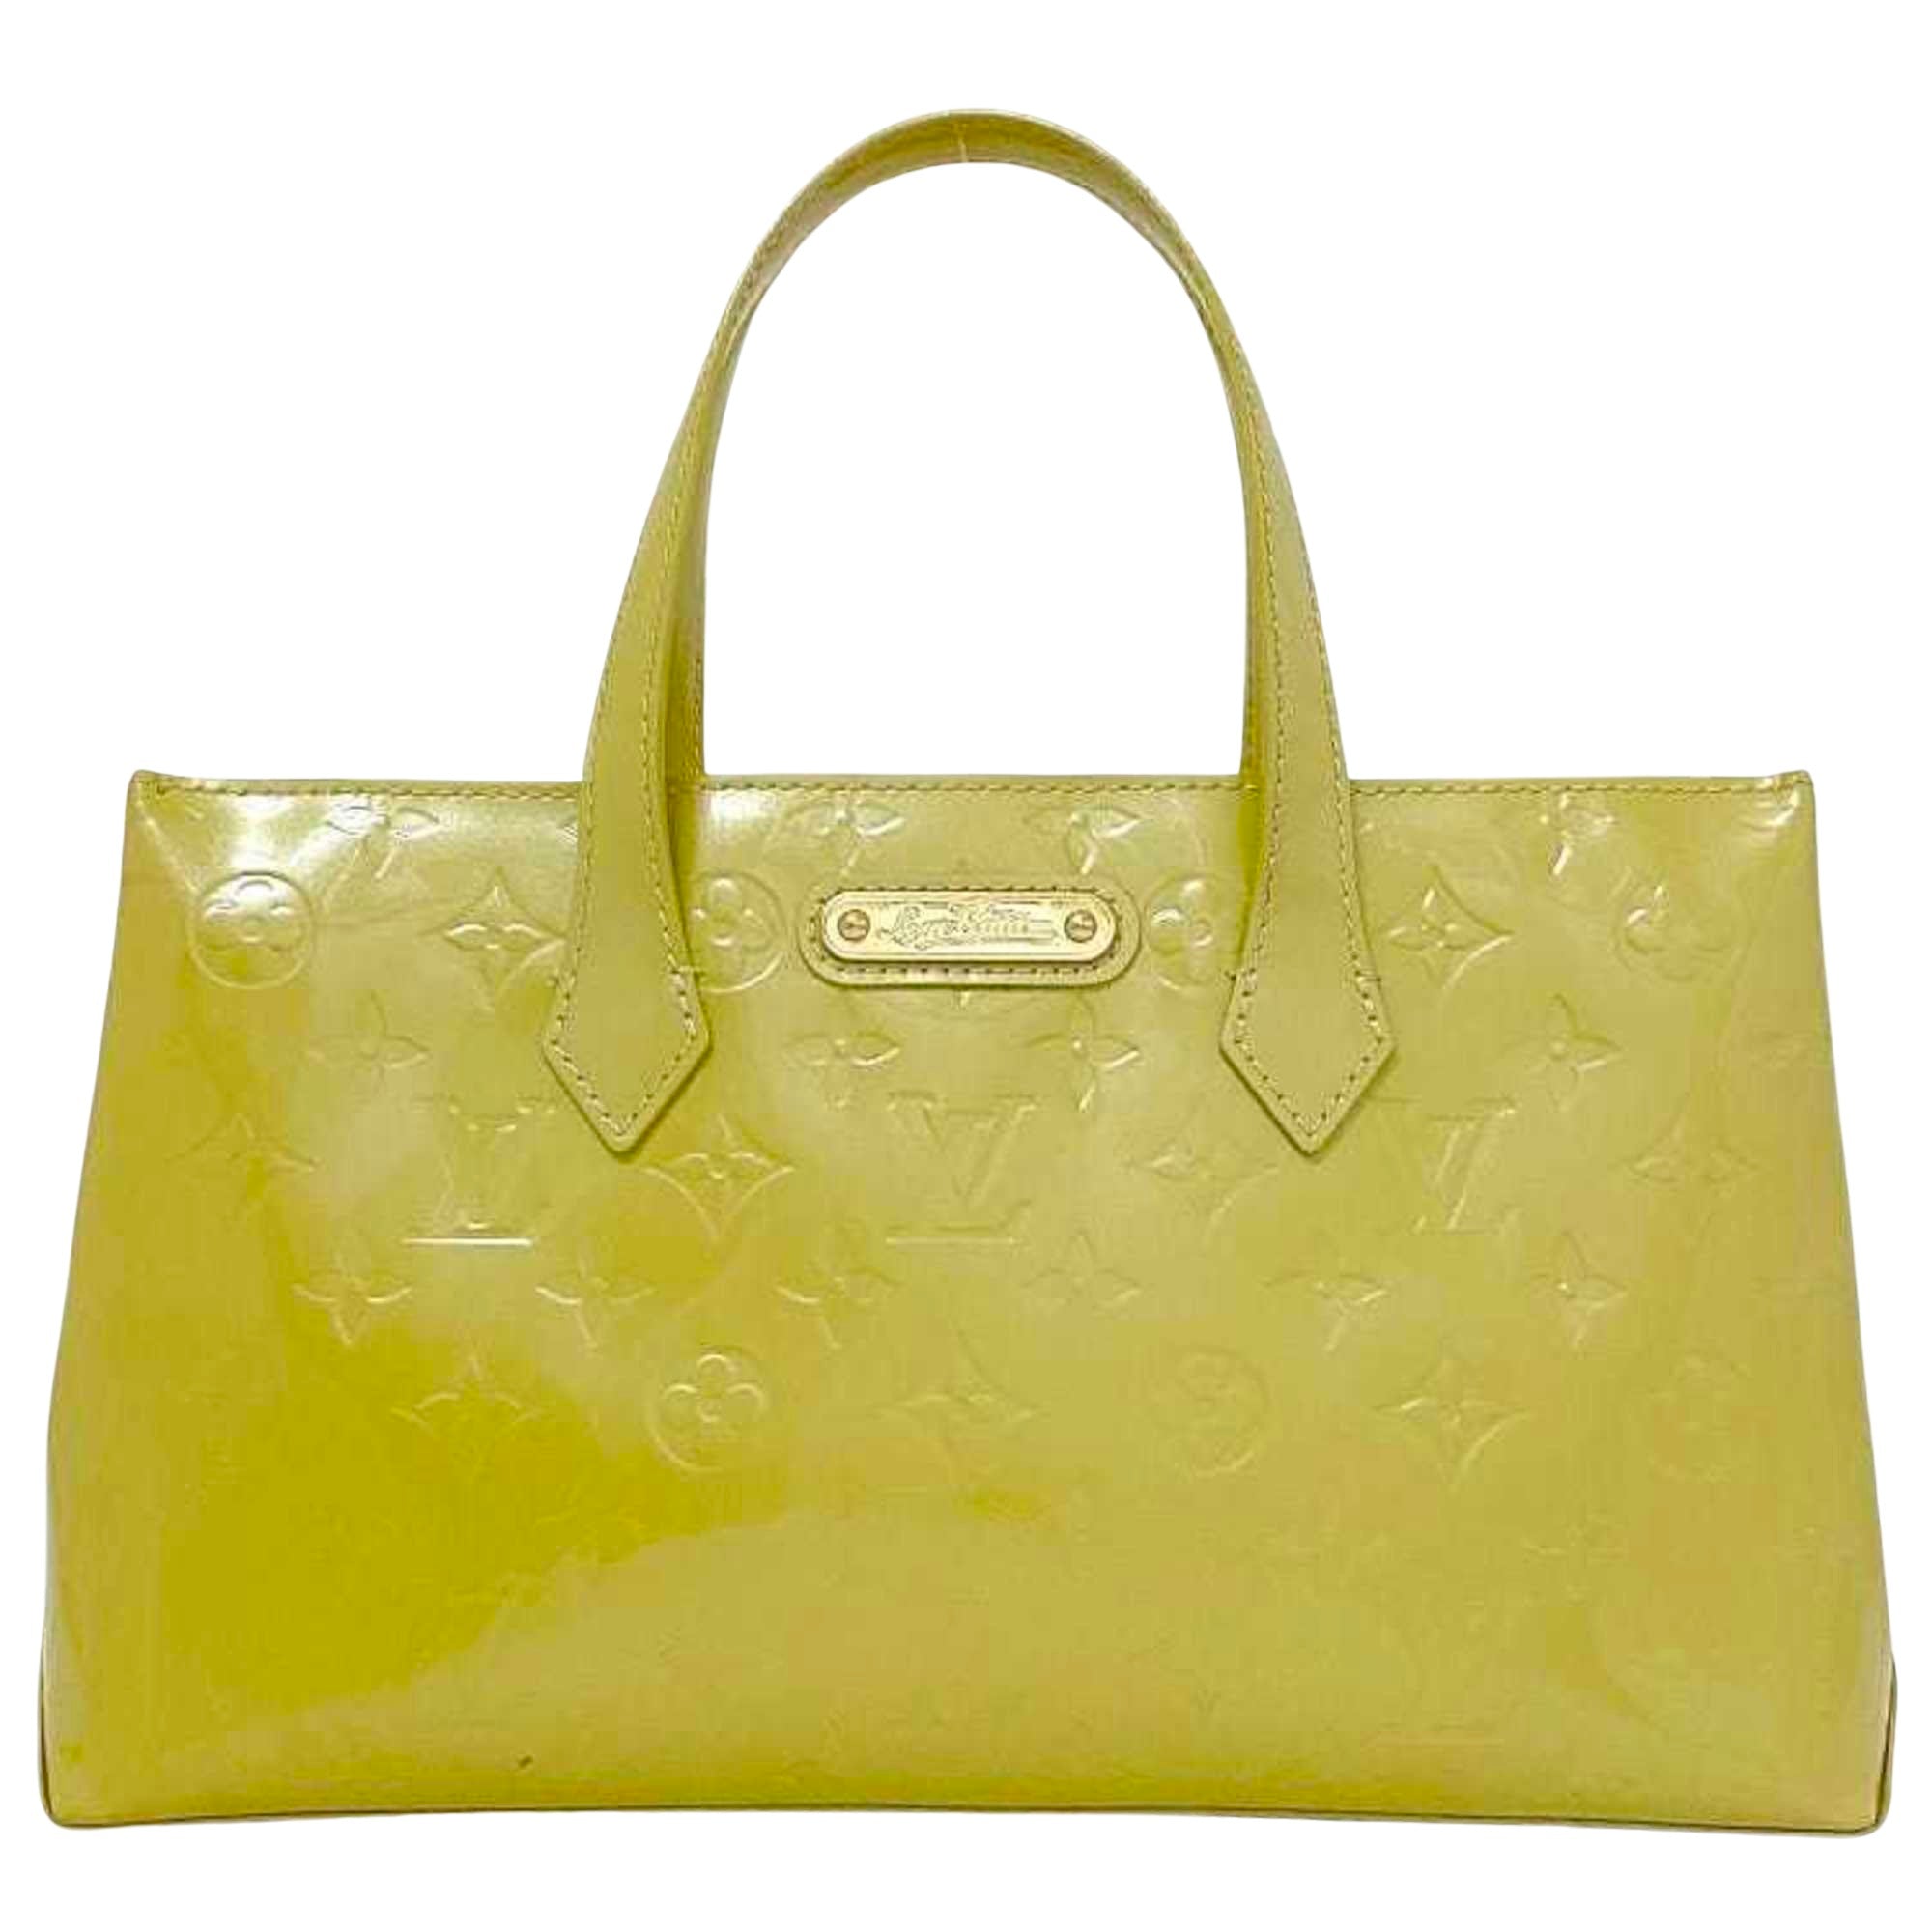 Louis Vuitton Wilshire Shopping Bag in Burgundy Monogram Patent